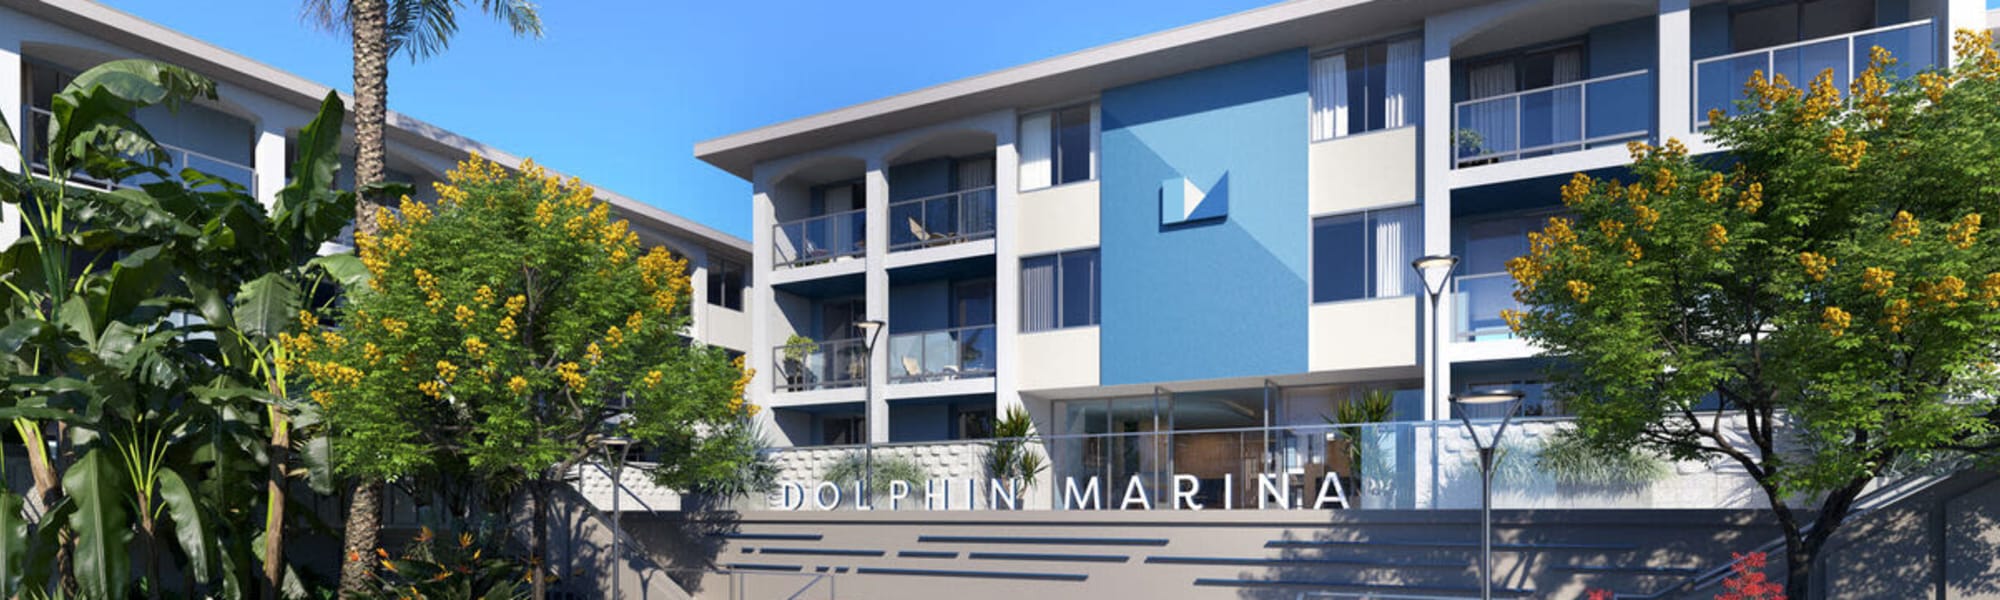 Directions to Dolphin Marina Apartments in Marina Del Rey, California  